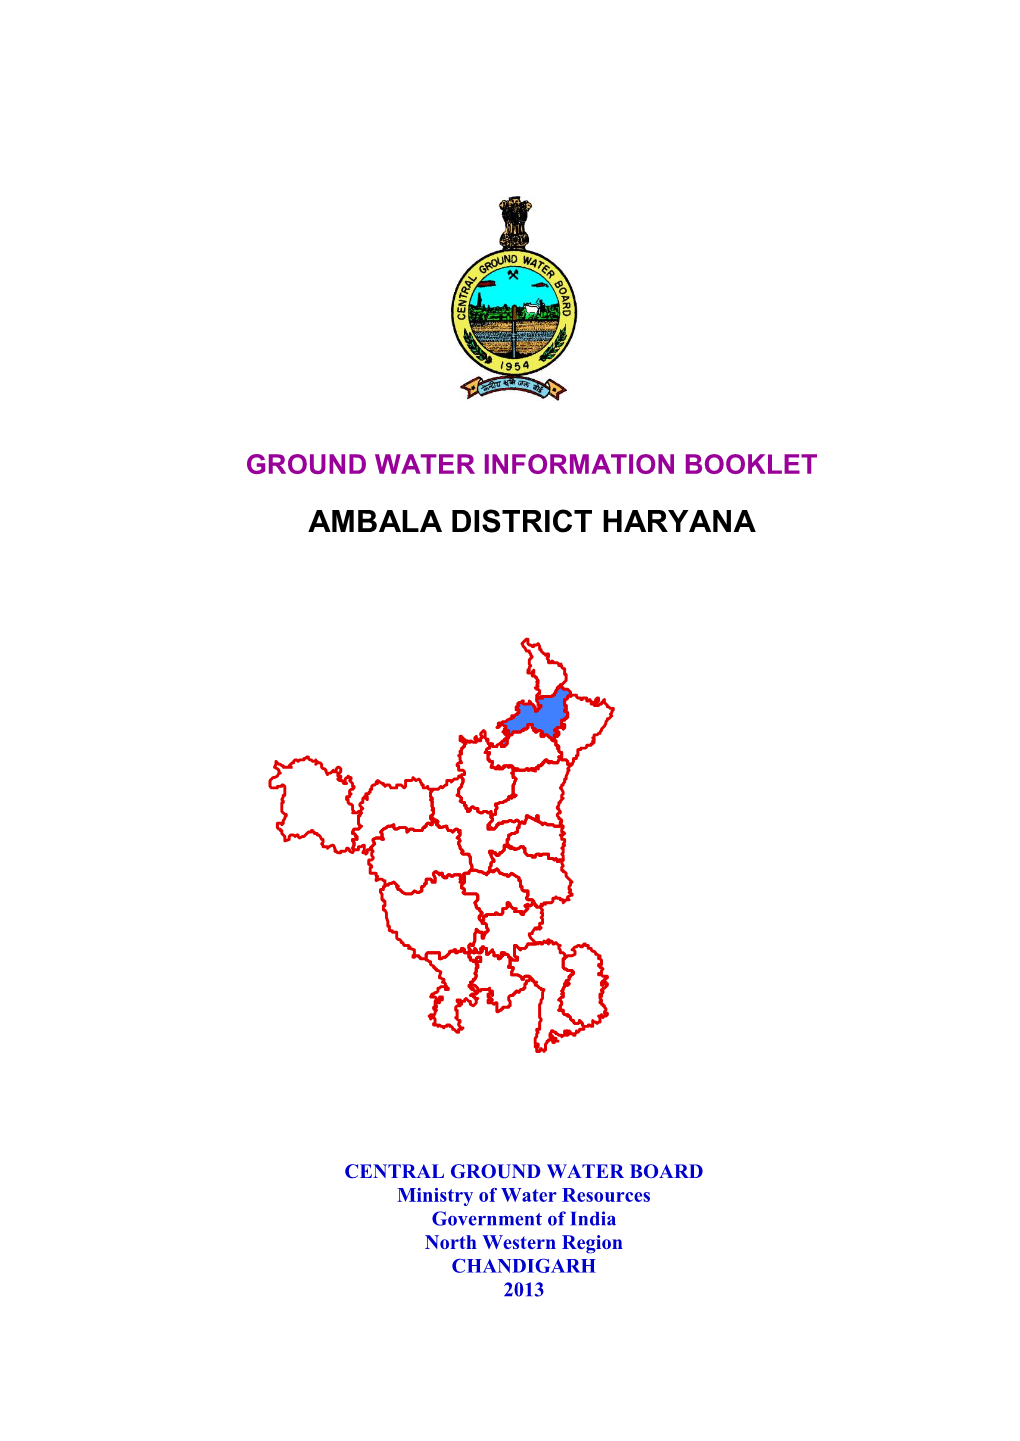 Ambala District Haryana